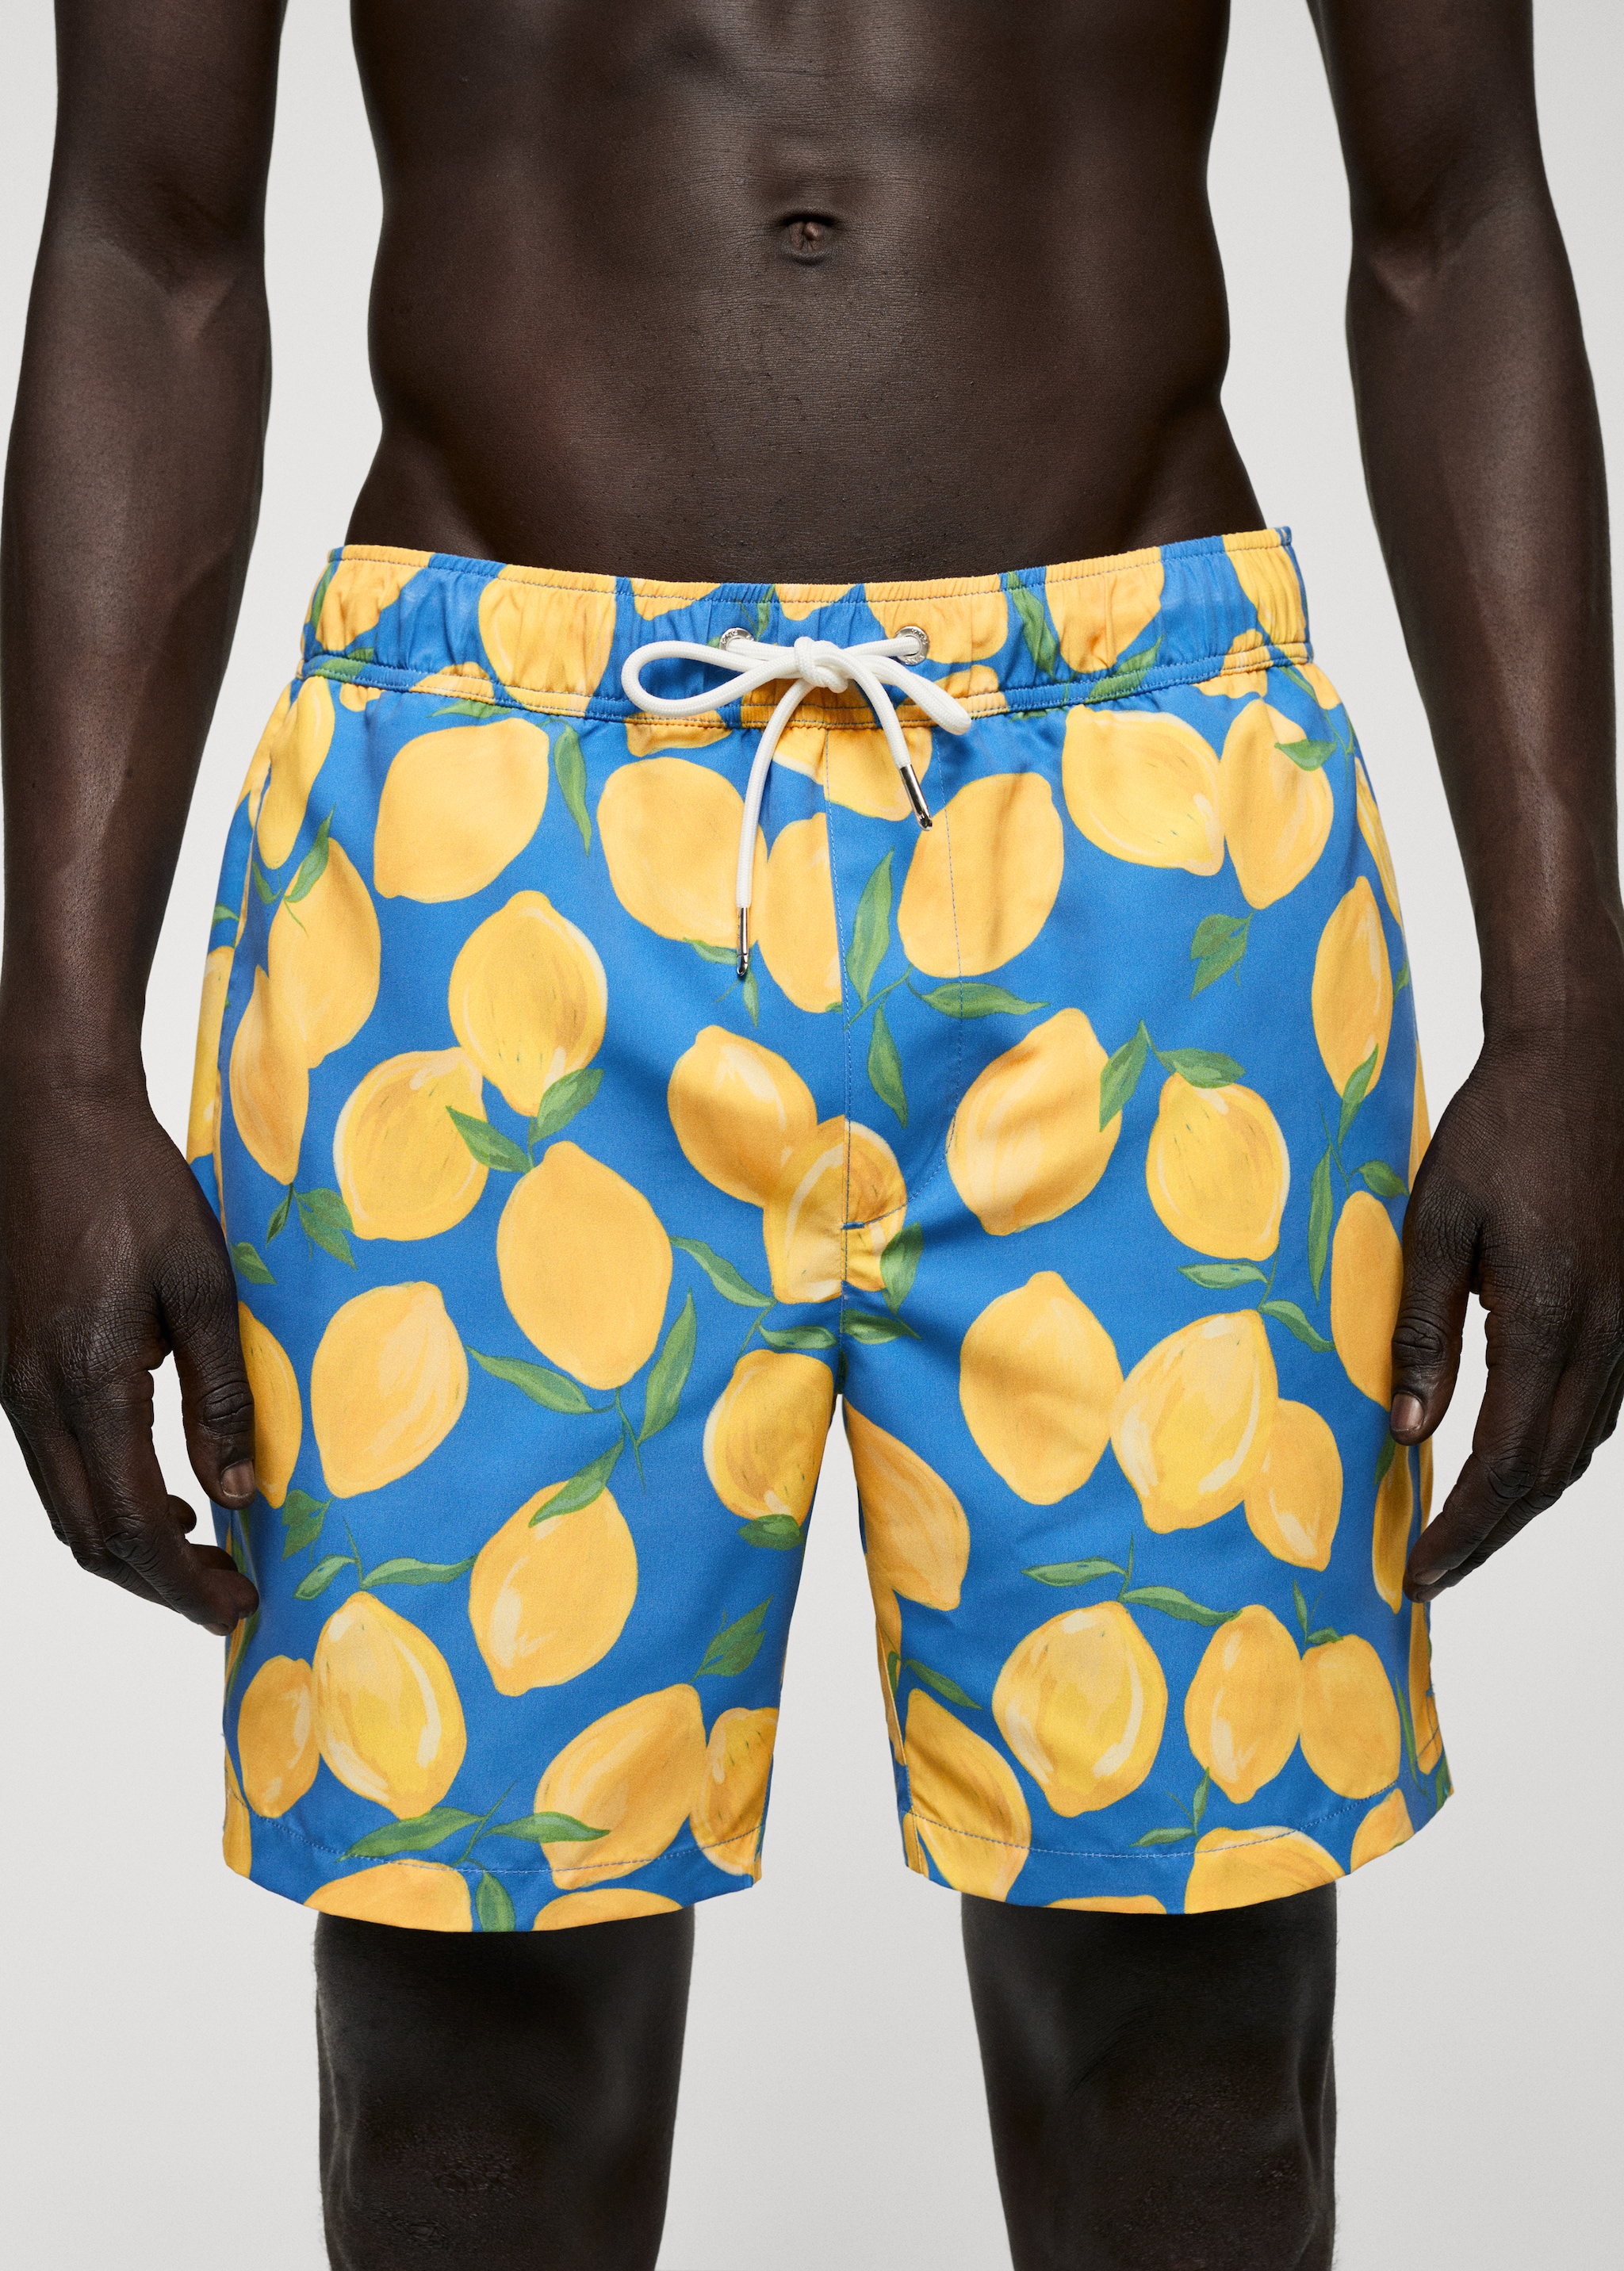 Lemons print swimsuit - Details of the article 1